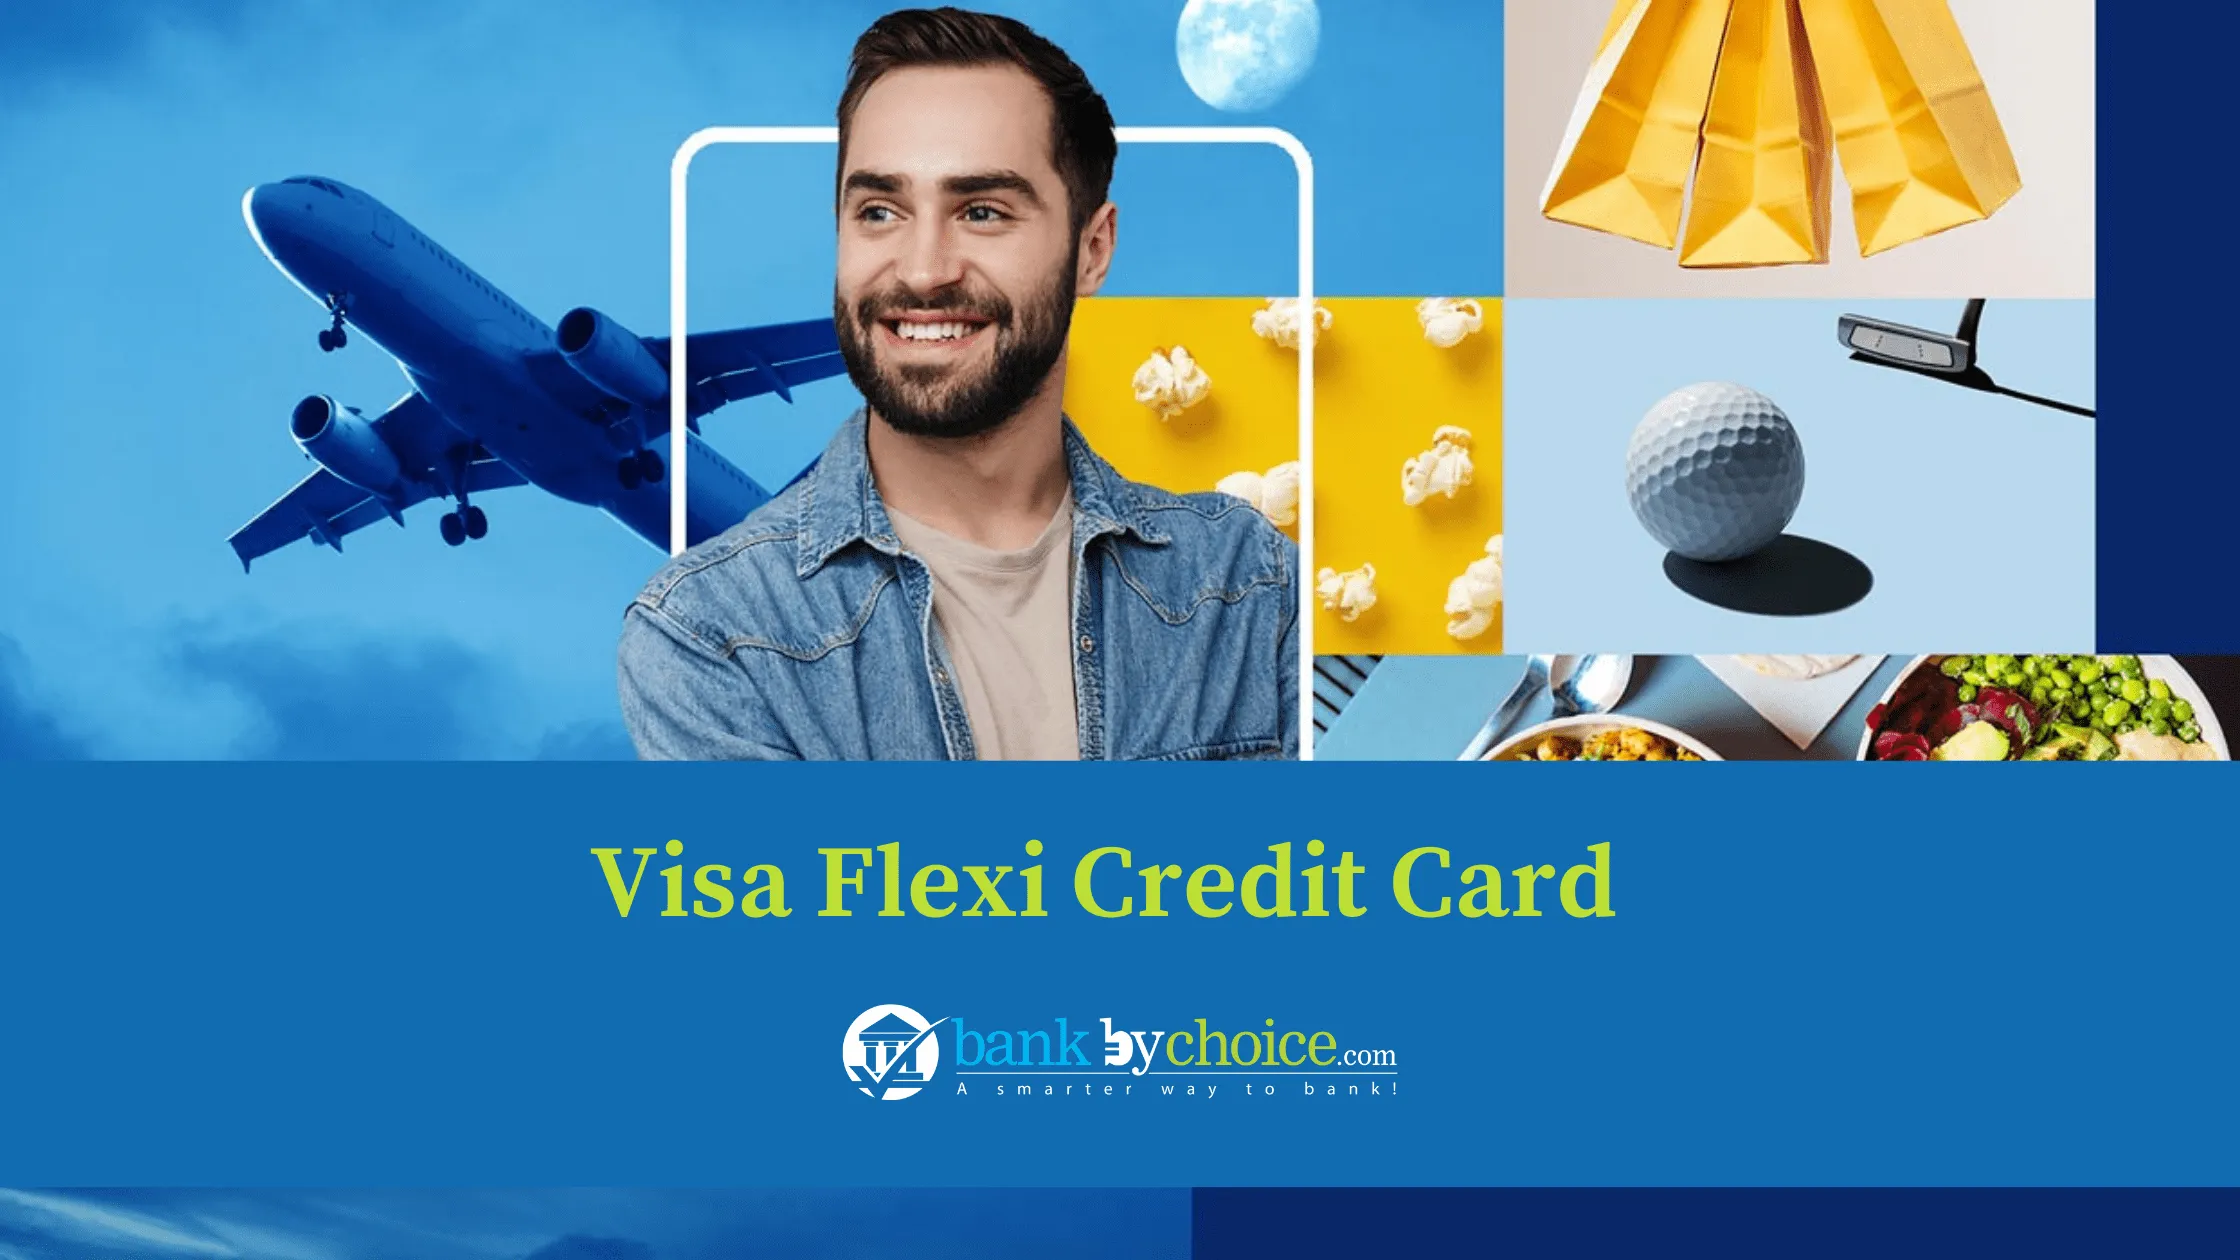 visa flexi credit cards in uae